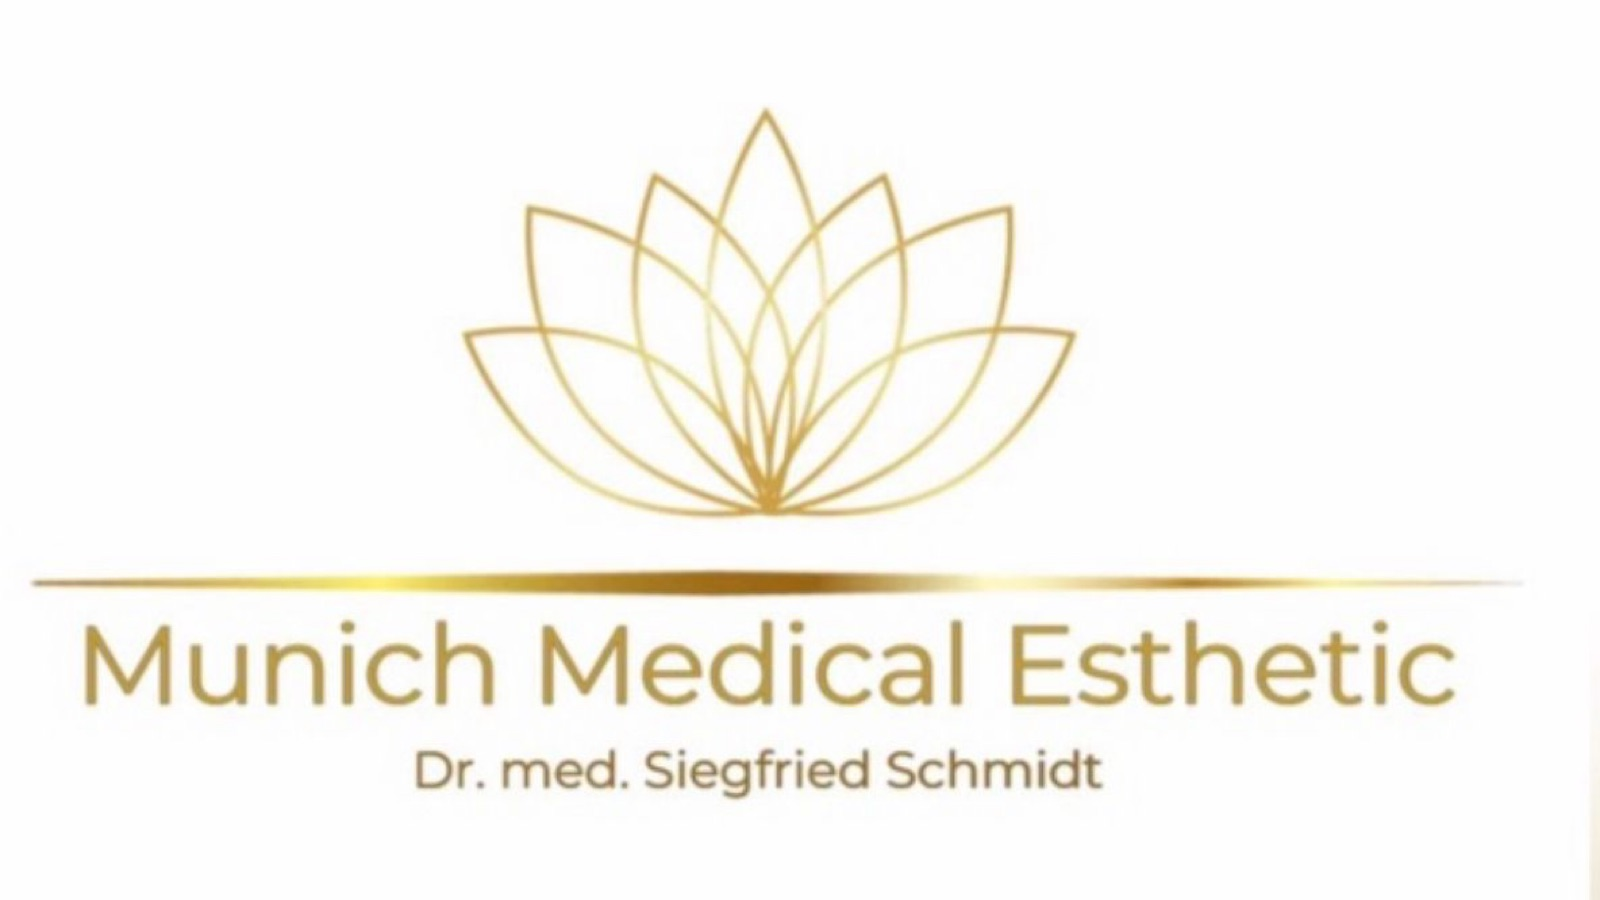 Munich Medical Esthetic